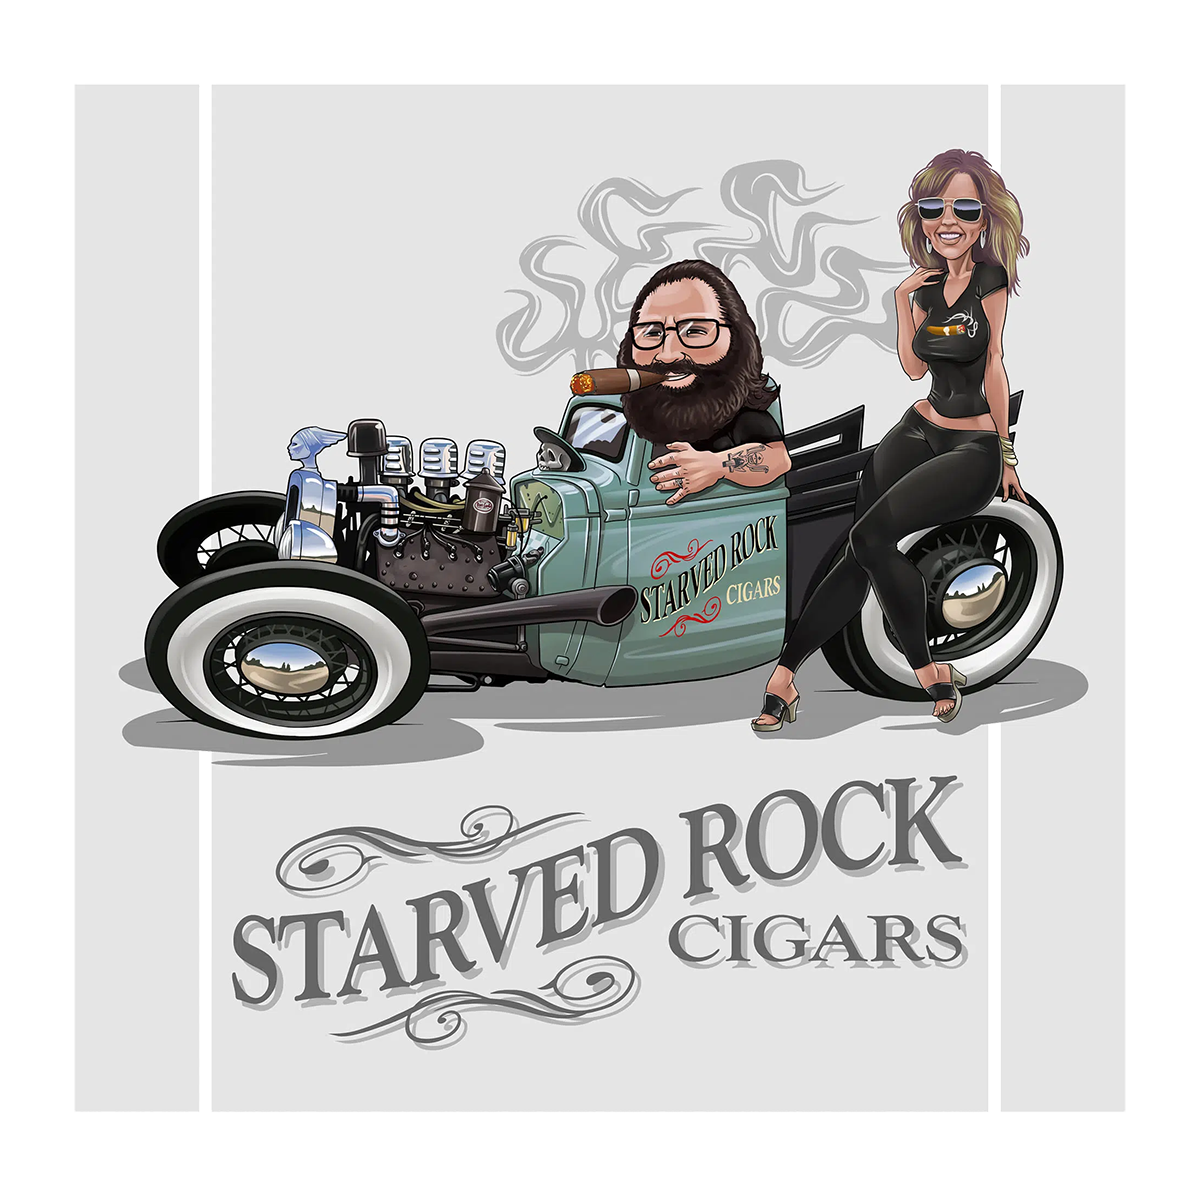 starved rock cigars